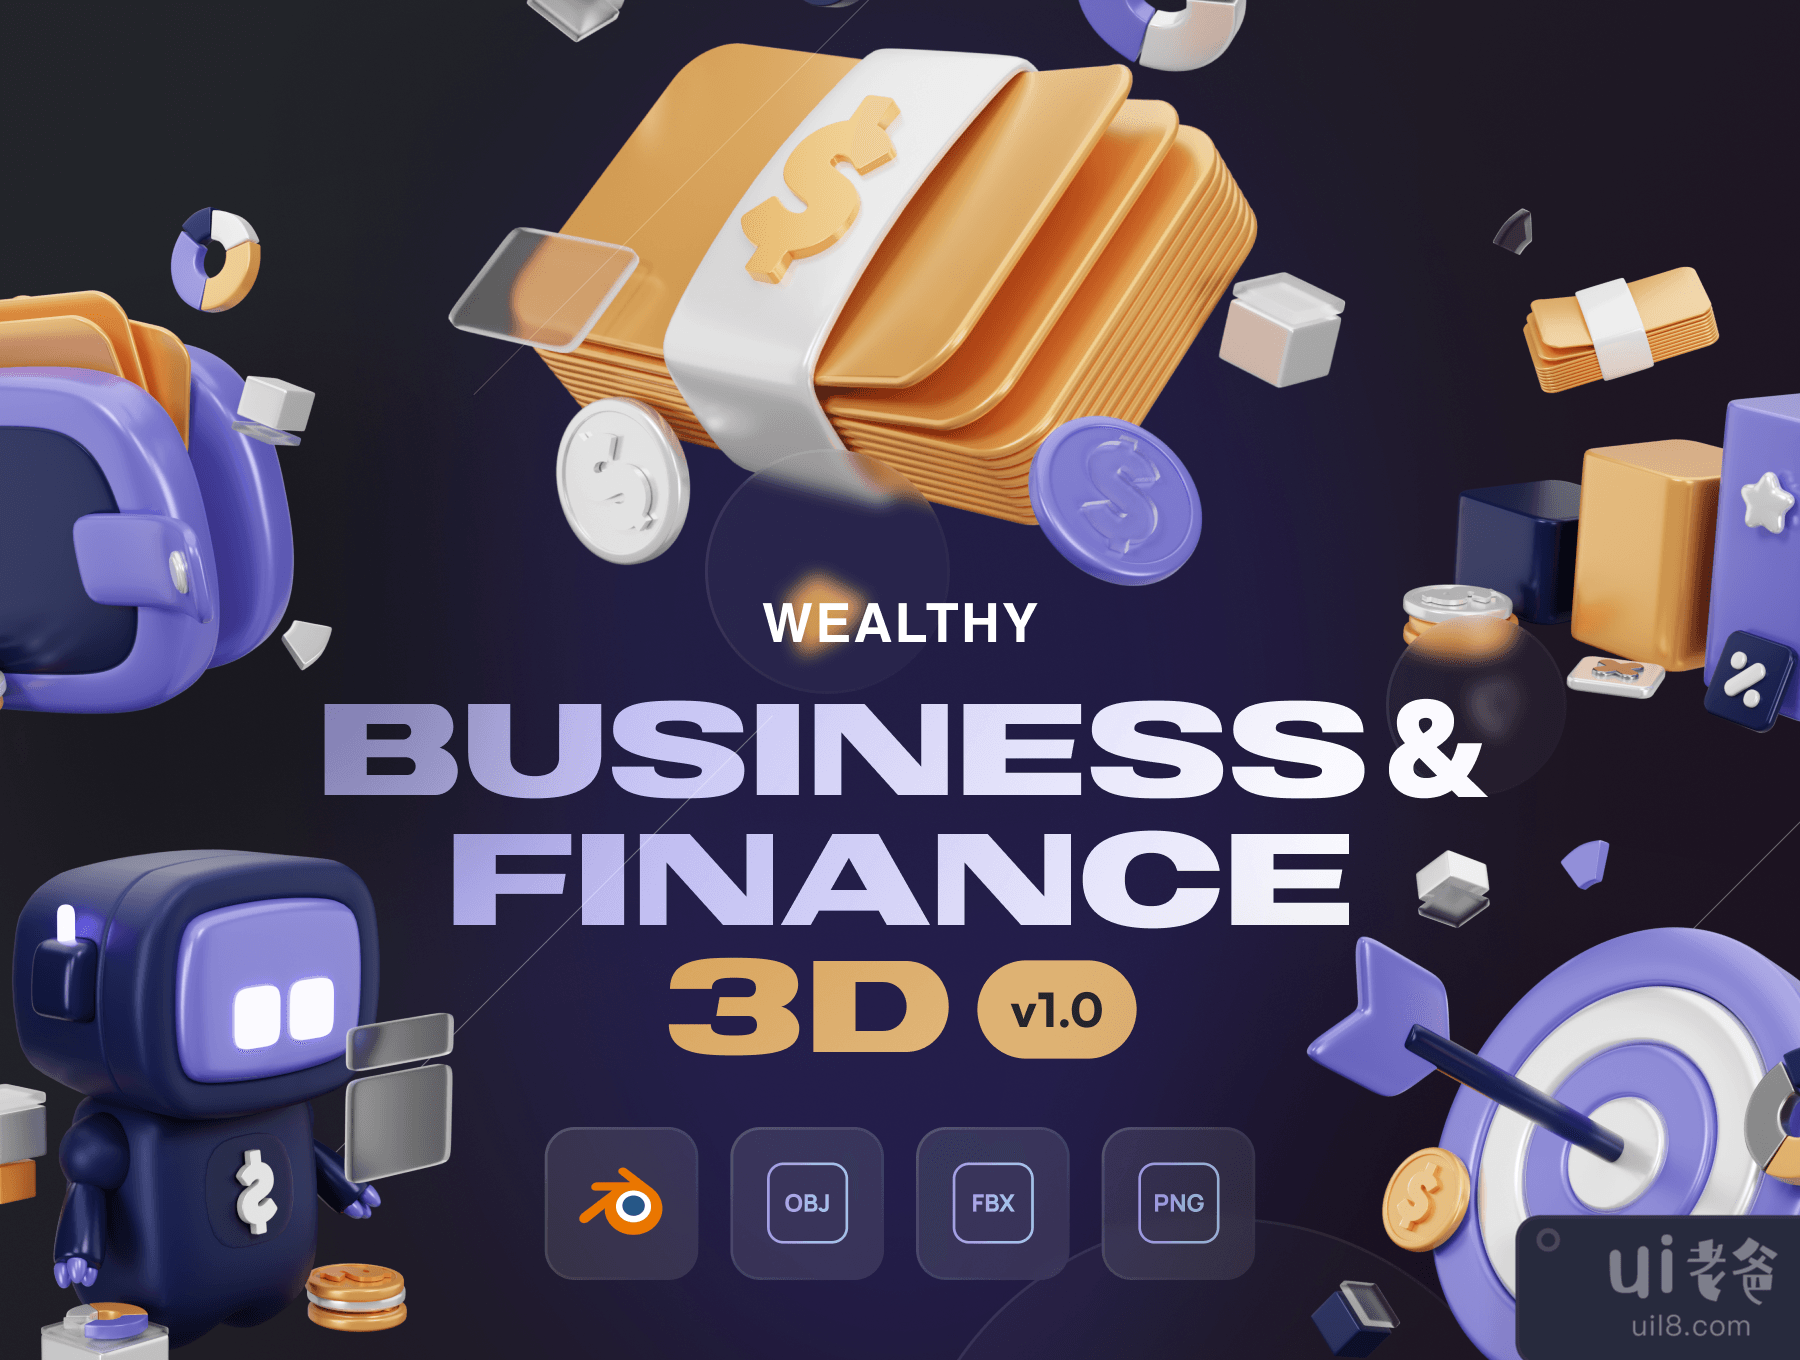 财富 - 商业和金融3D图标集 (Wealthy - Business & Finance 3D Icon Set)插图